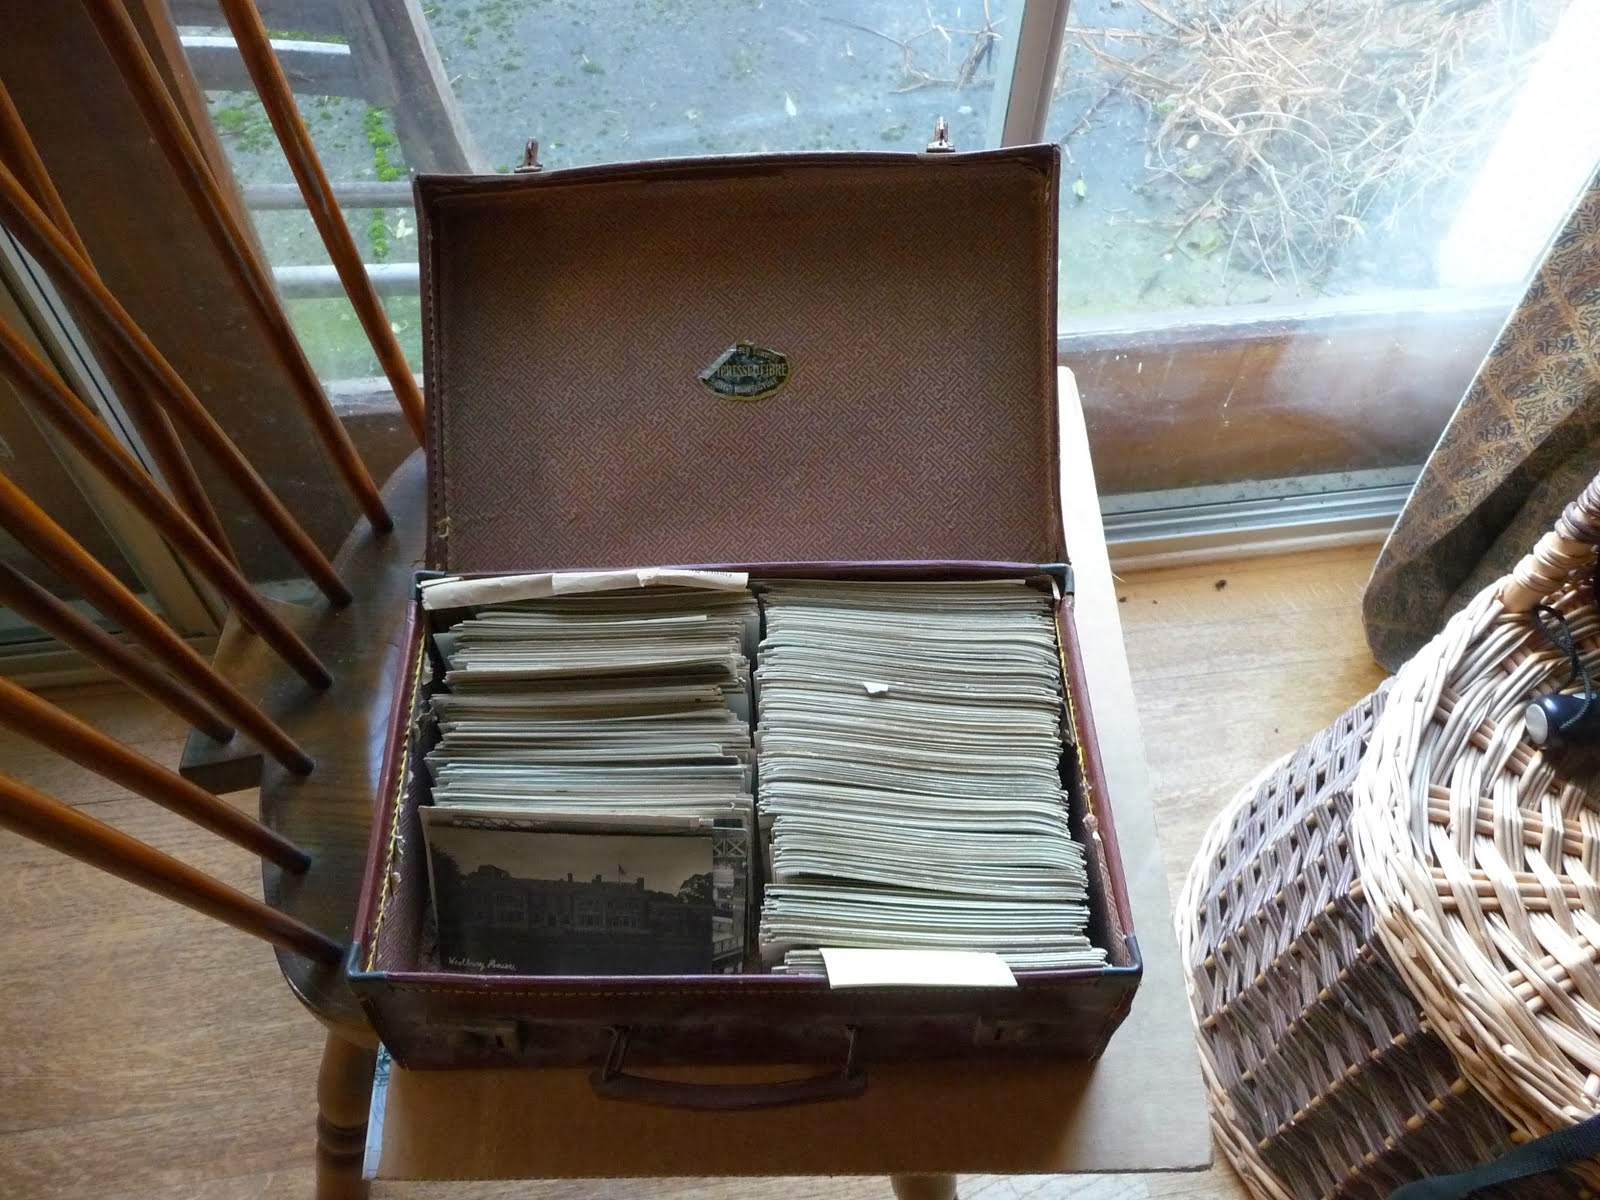 A suitcase archive